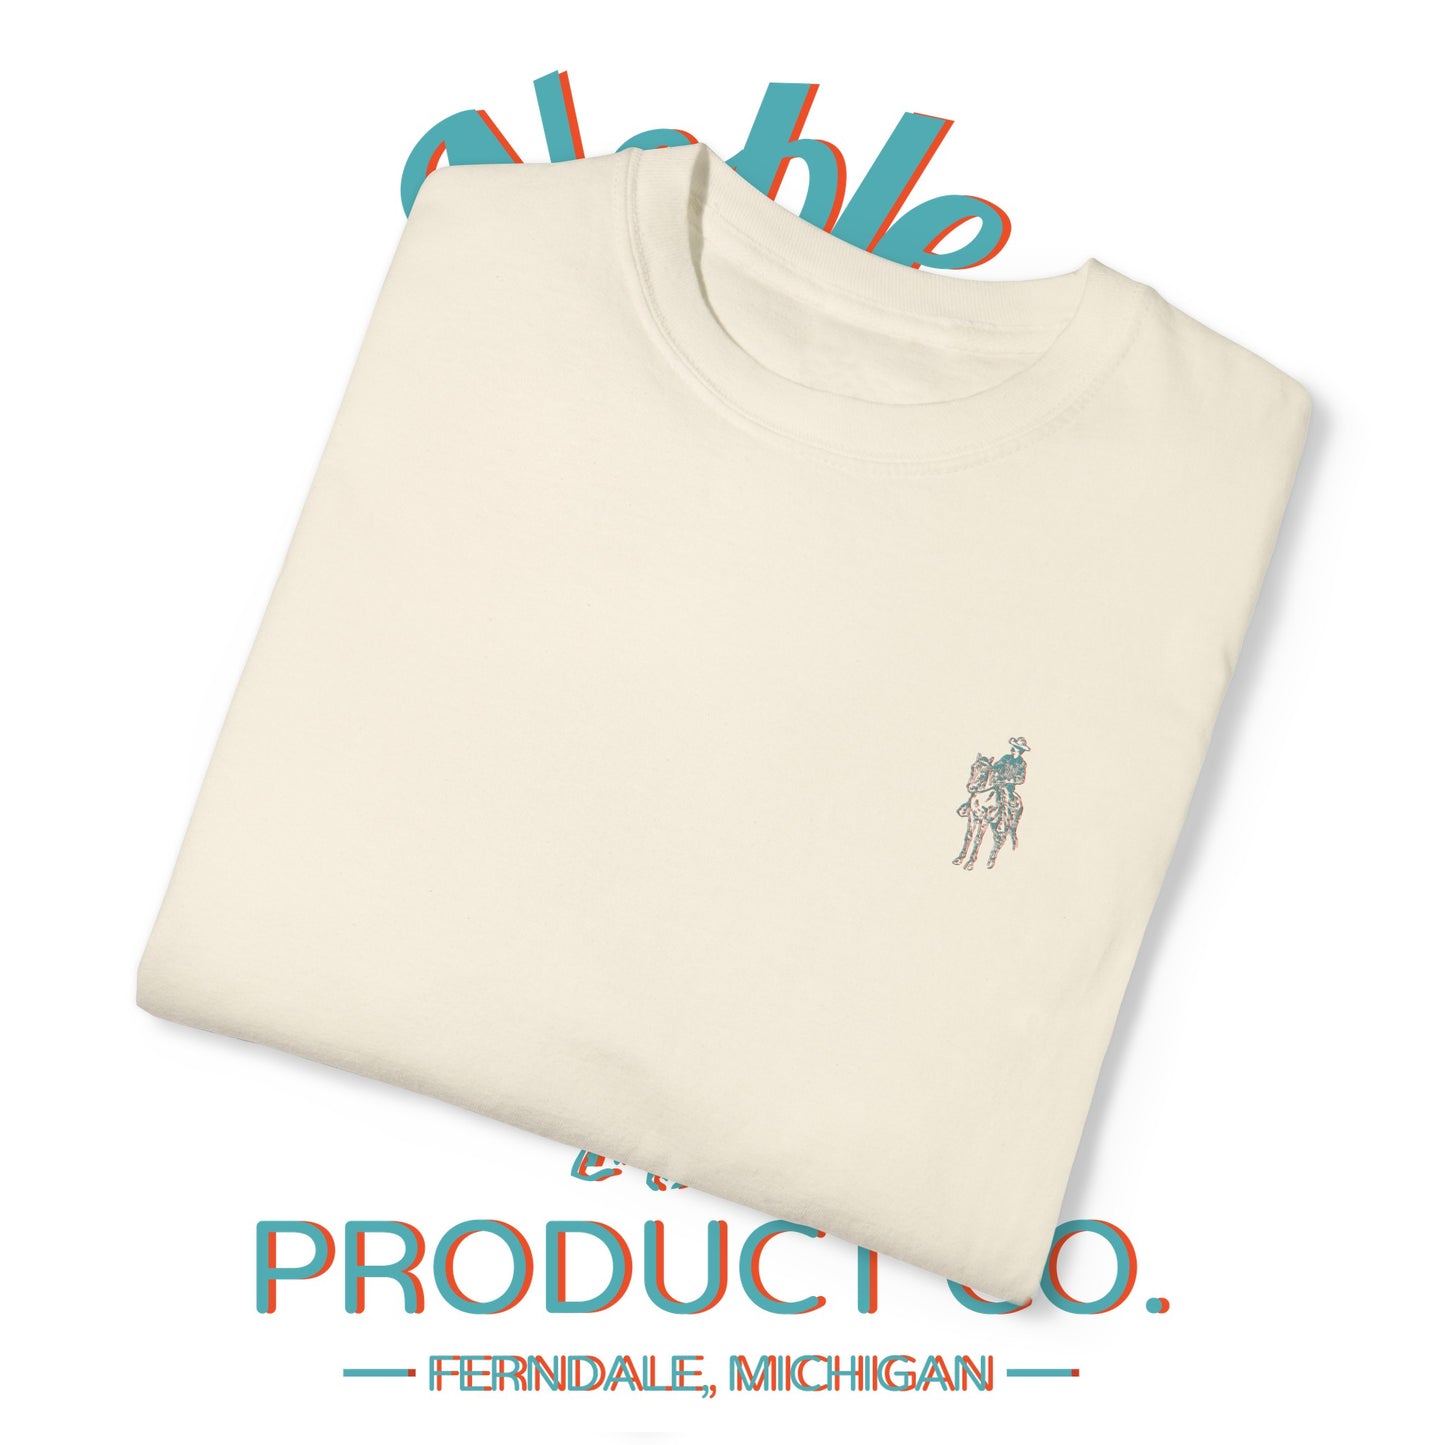 Noble 3D Horseback T-shirt